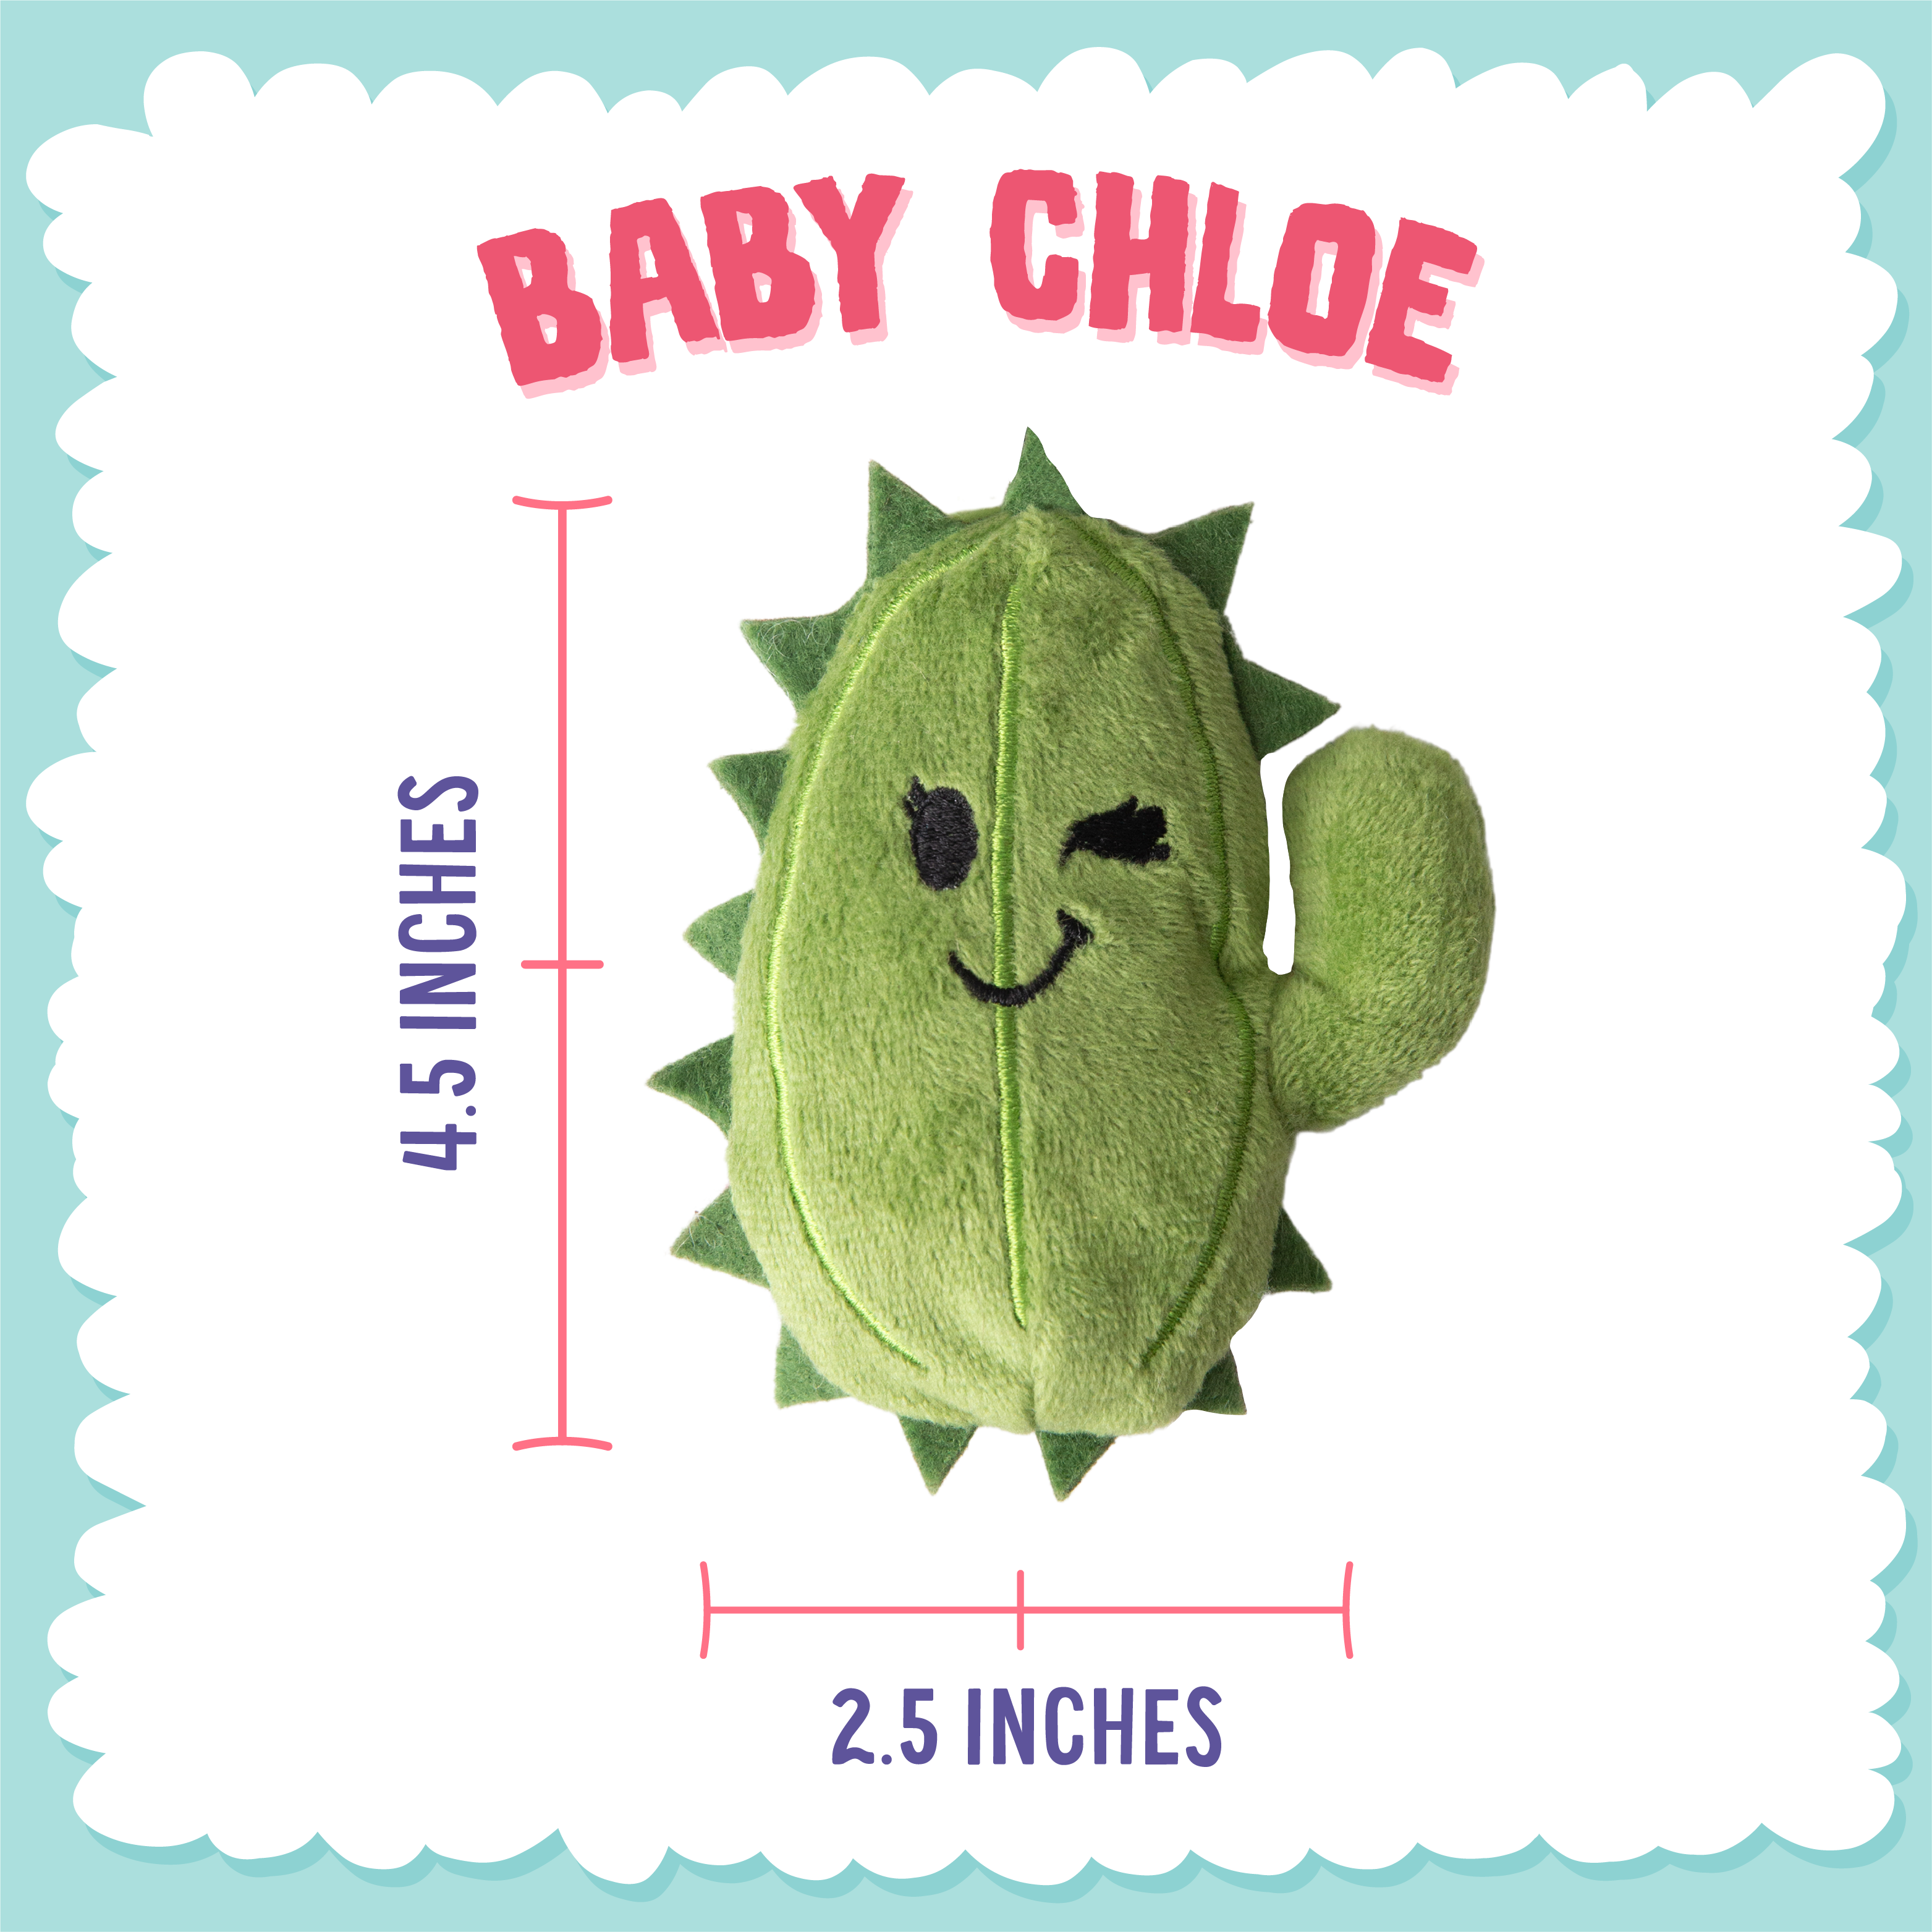 Baby Chloe the Cactus